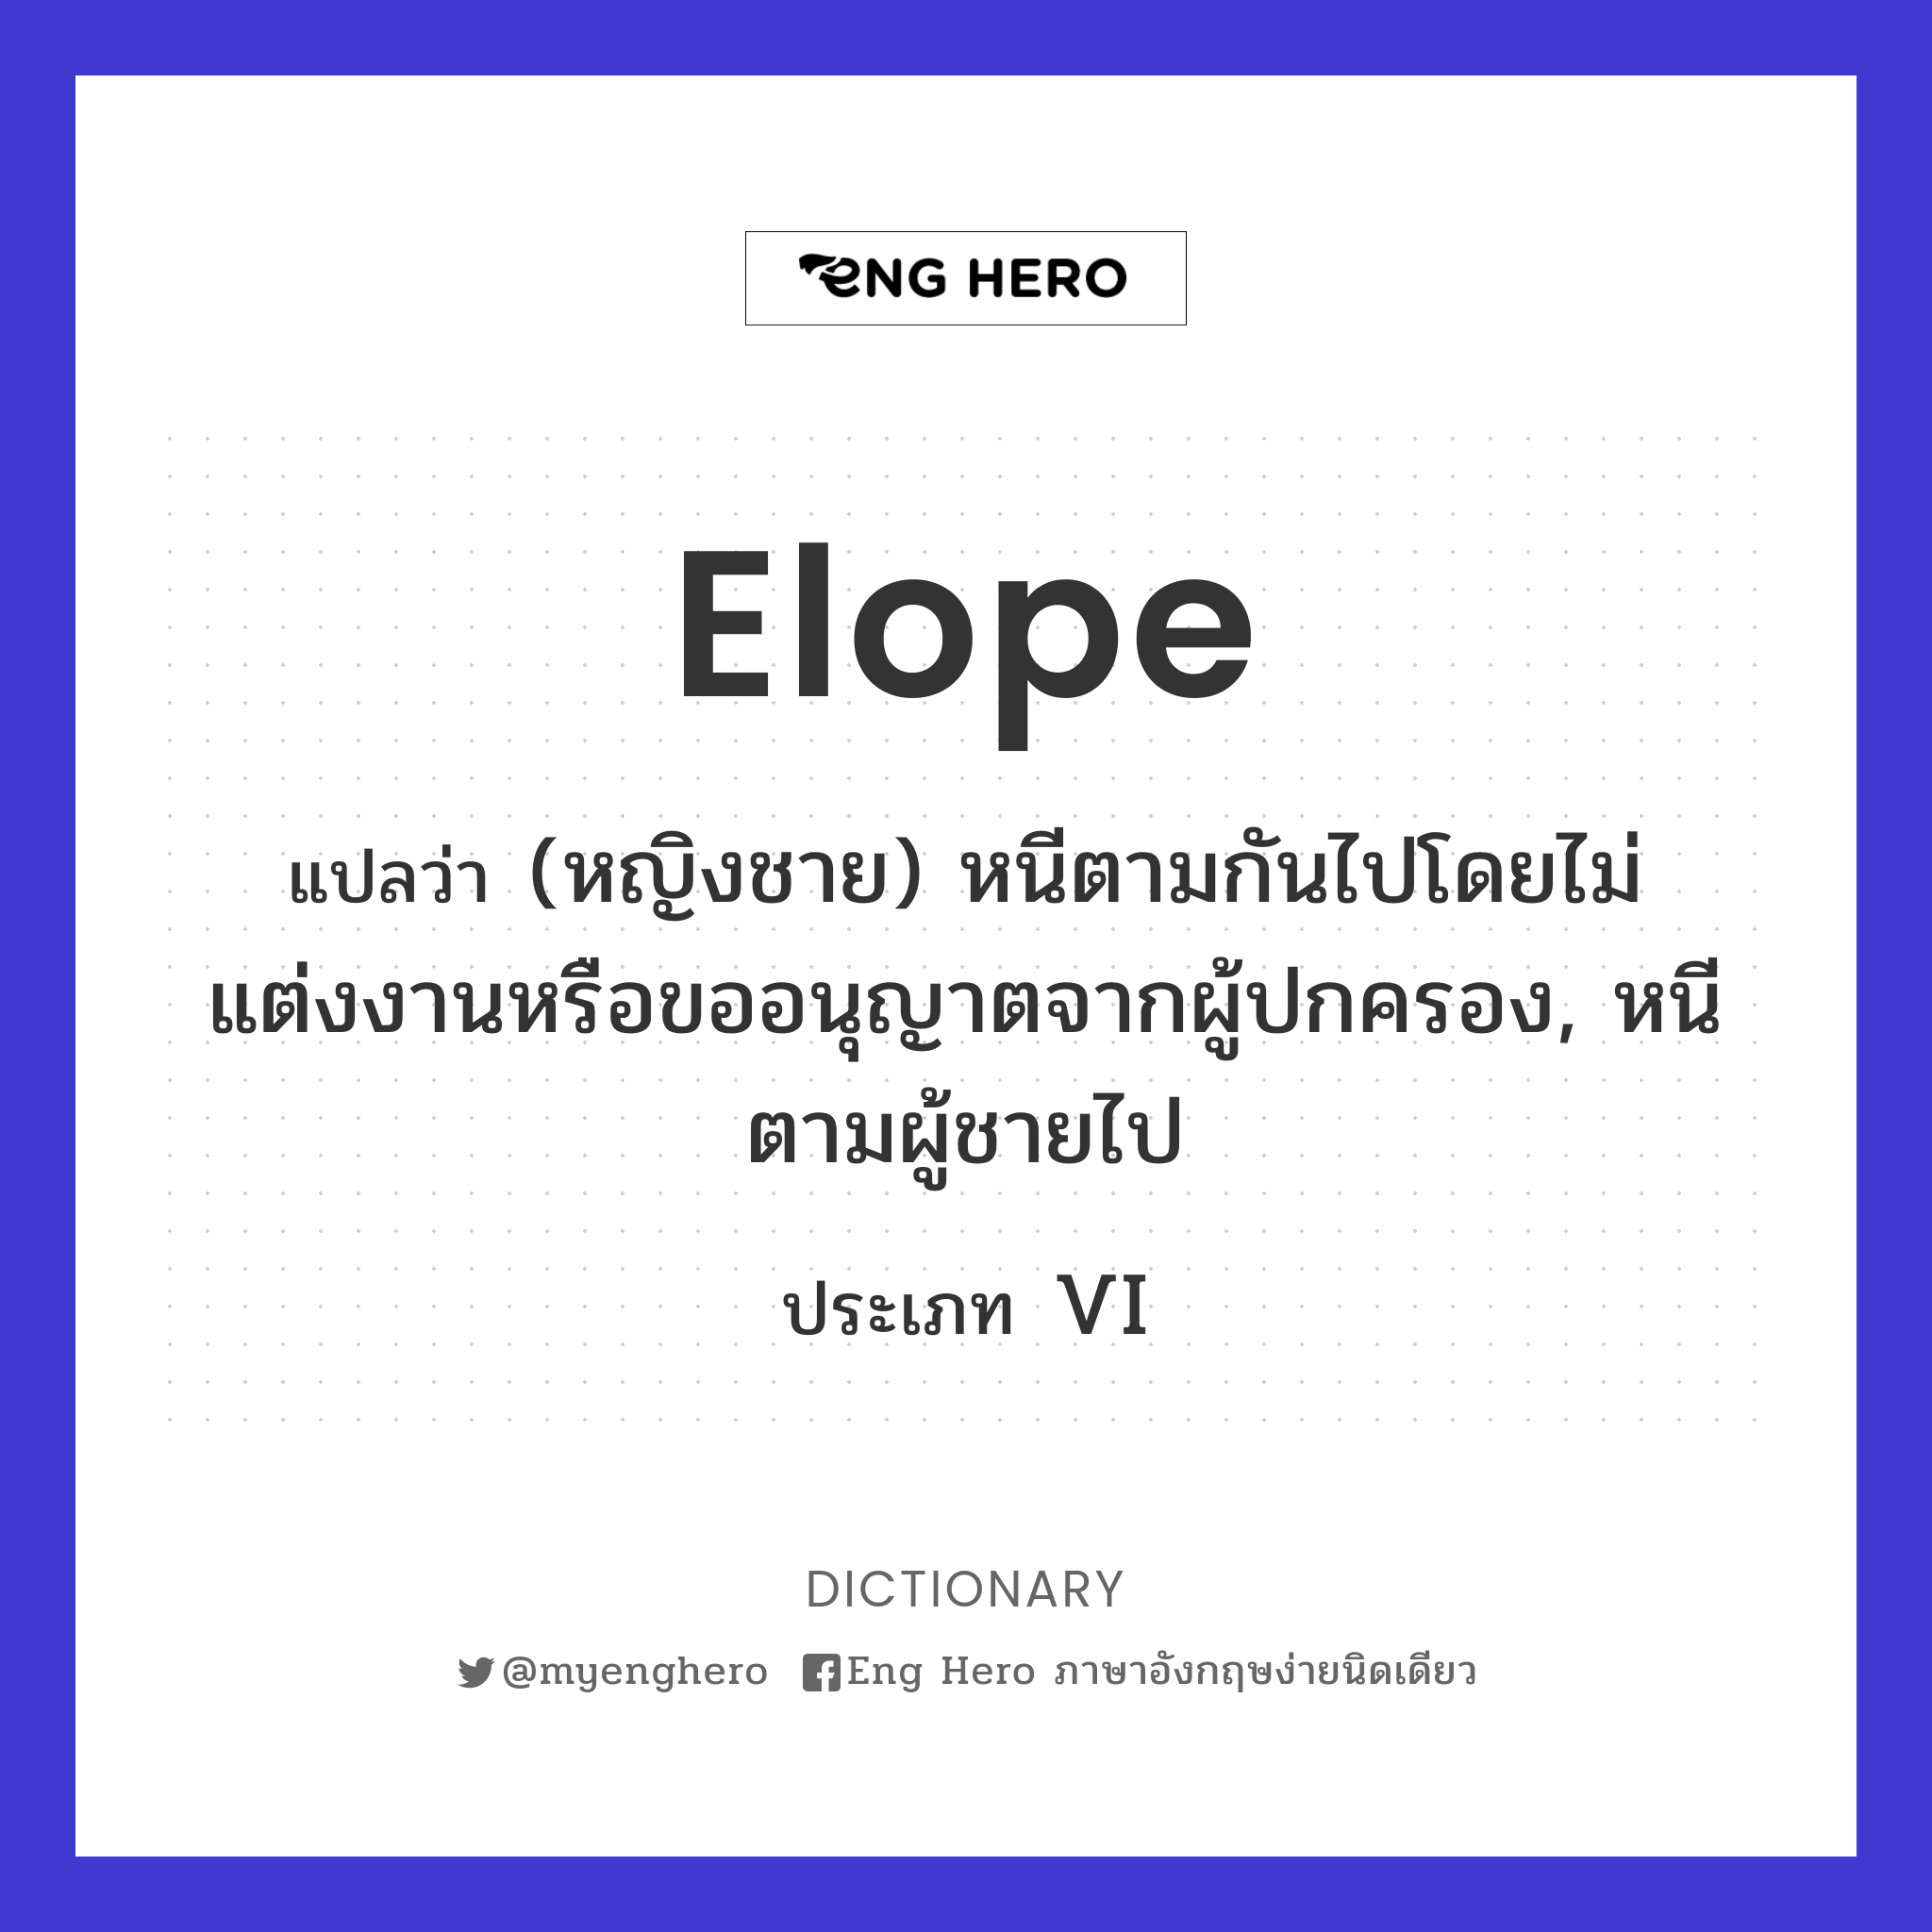 elope